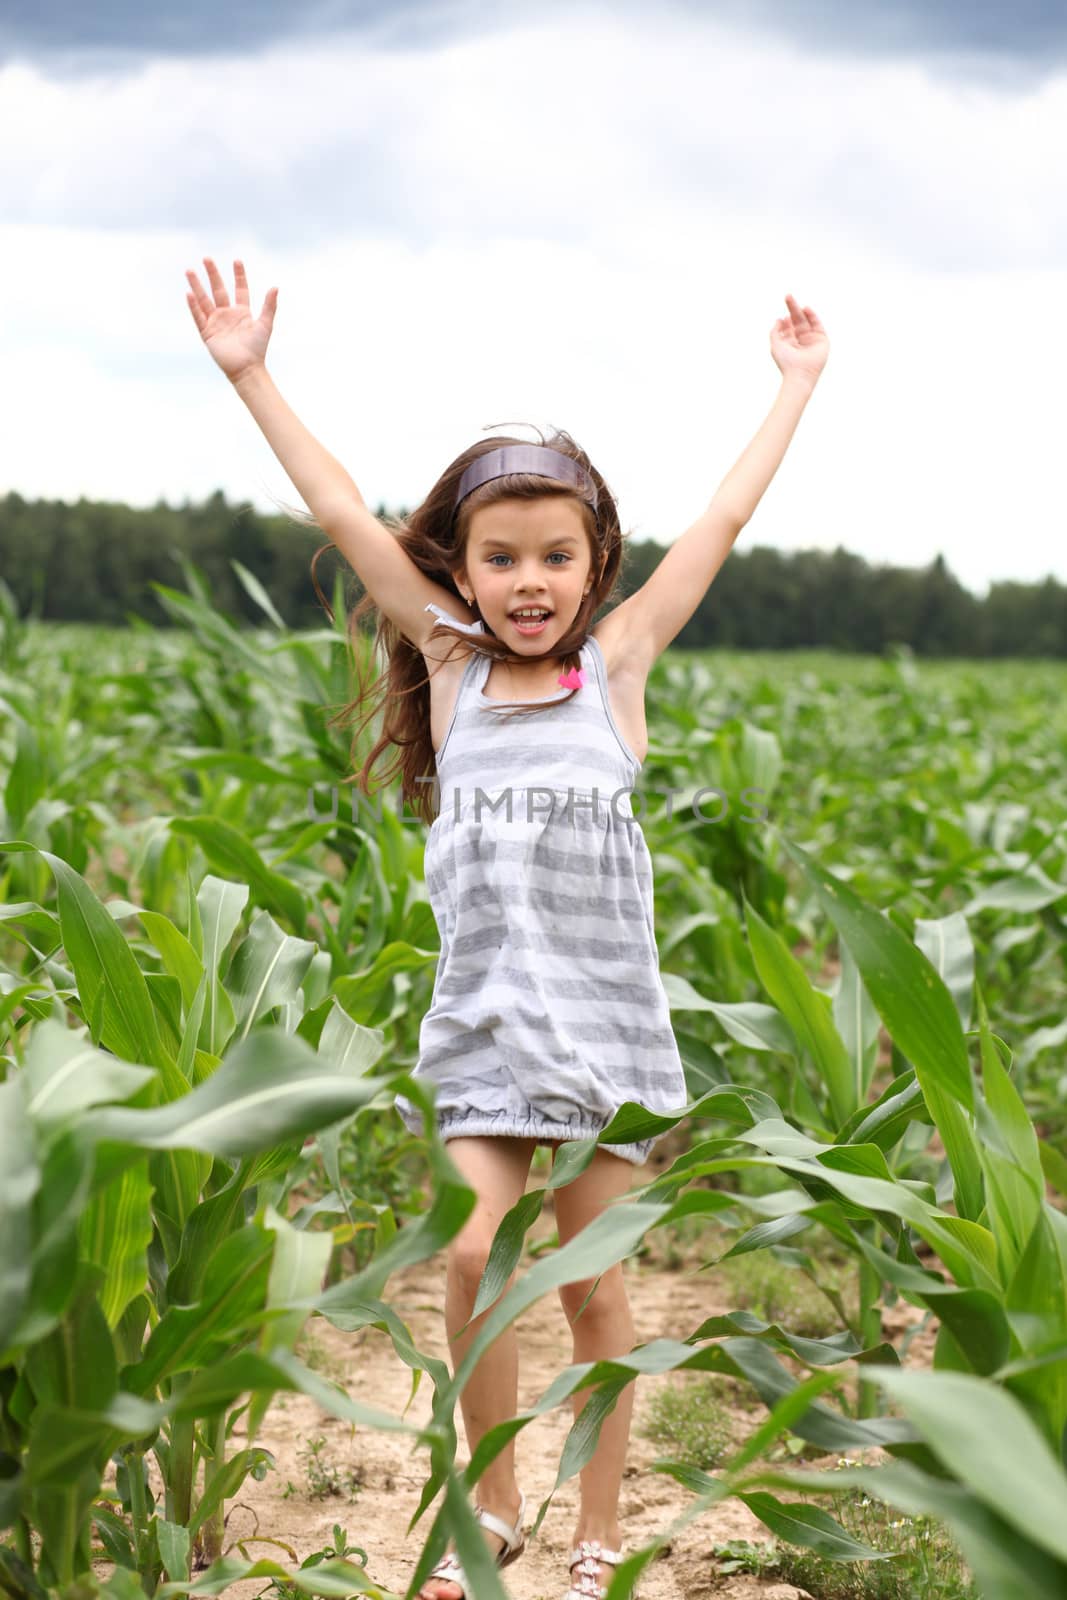 Joyful little girl running through the corn field by andersonrise